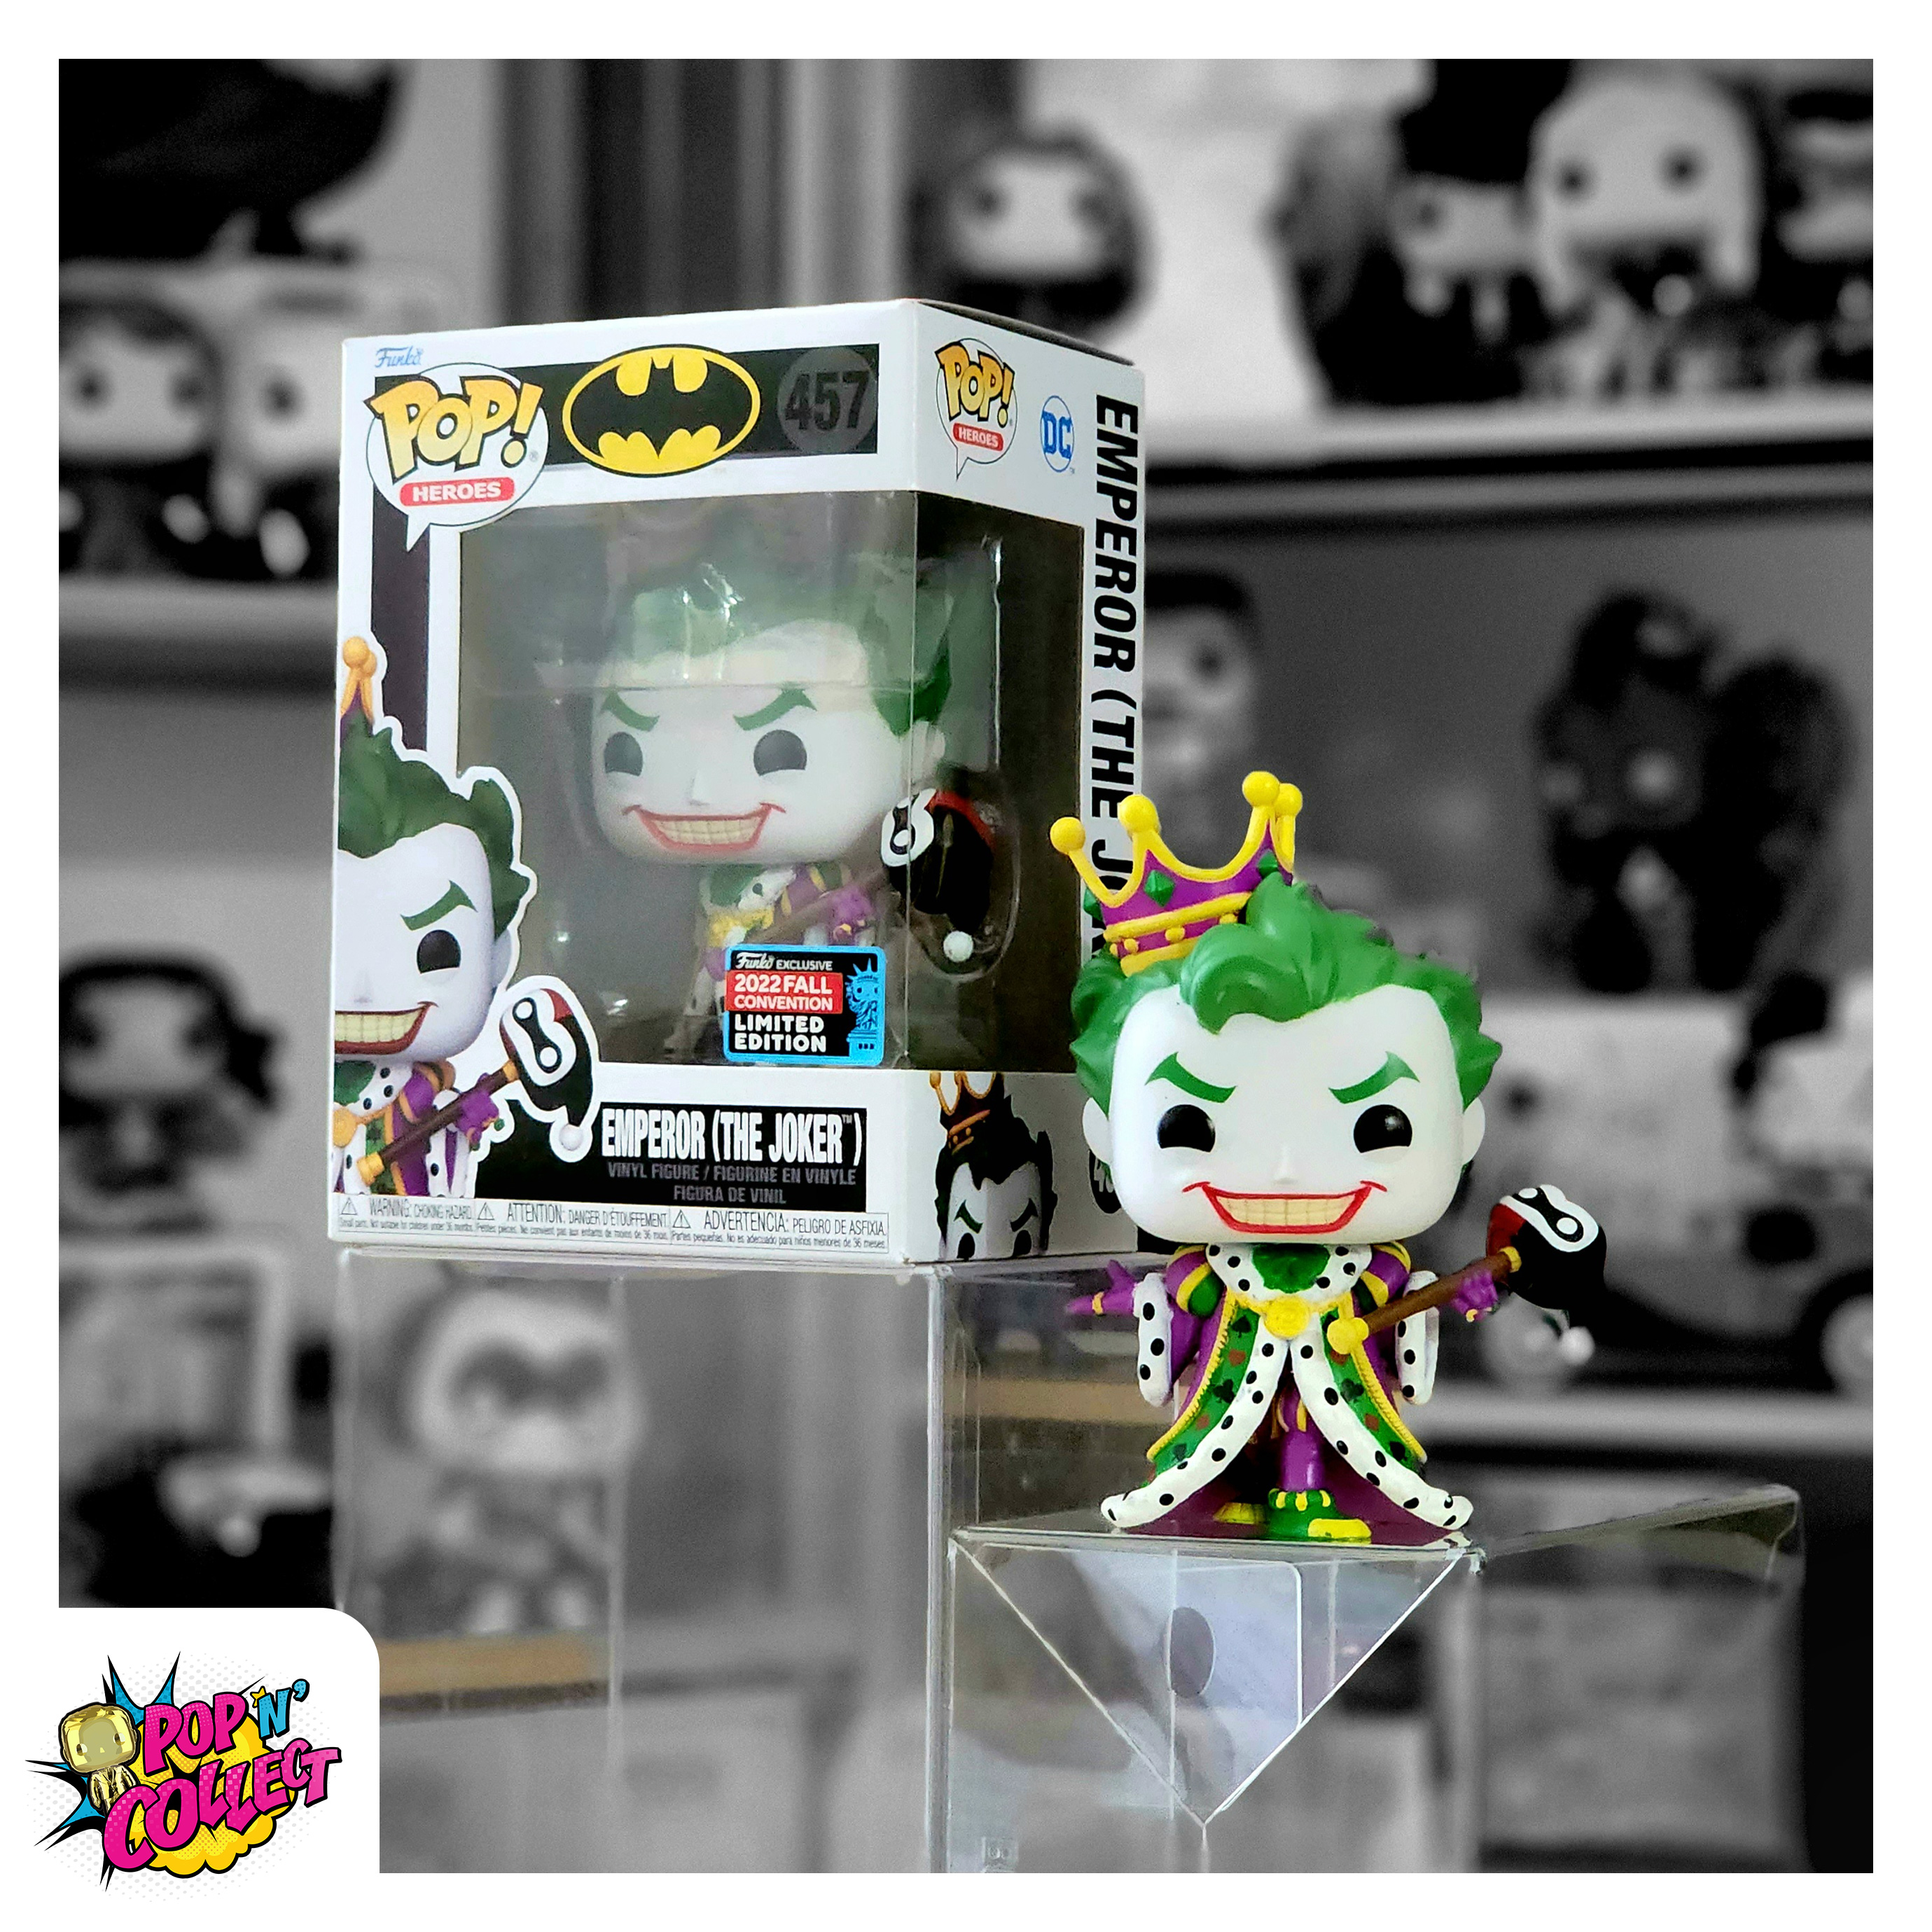 Funko Pop Batman - Emperor (The Joker) - 457 - NYCC 2022 // Just One Pop  Showcase 